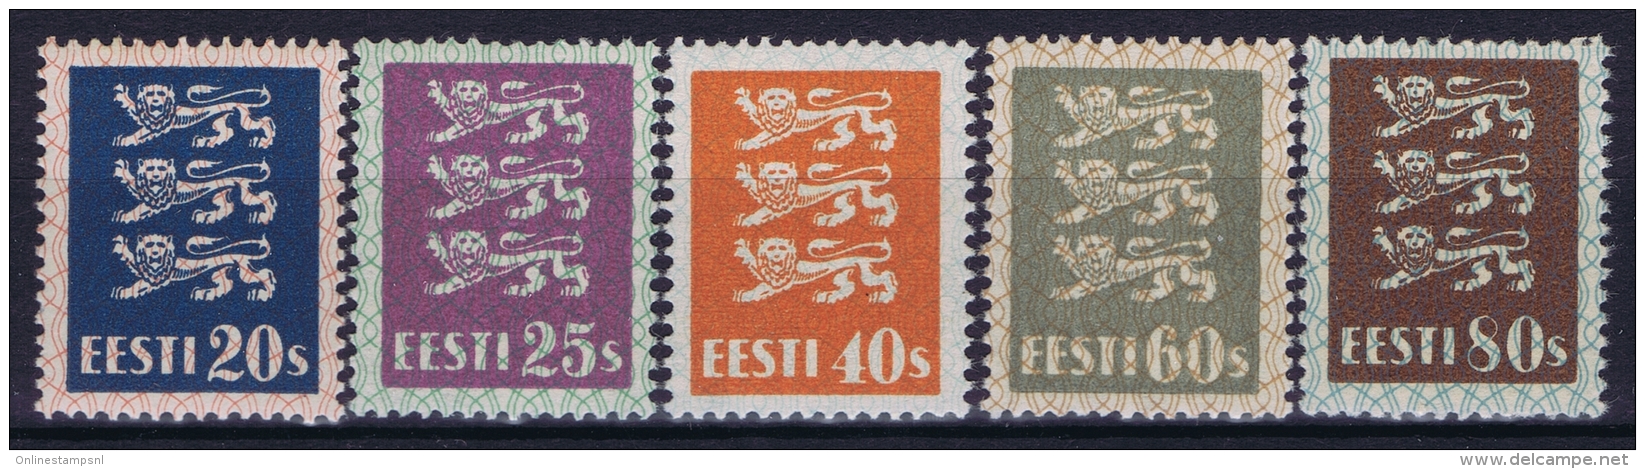 Estland Estonia Estonie: Mi 82 - 86 MNH/**/postfrisch/neuf Sans Charniere 1928 High Values - Estland